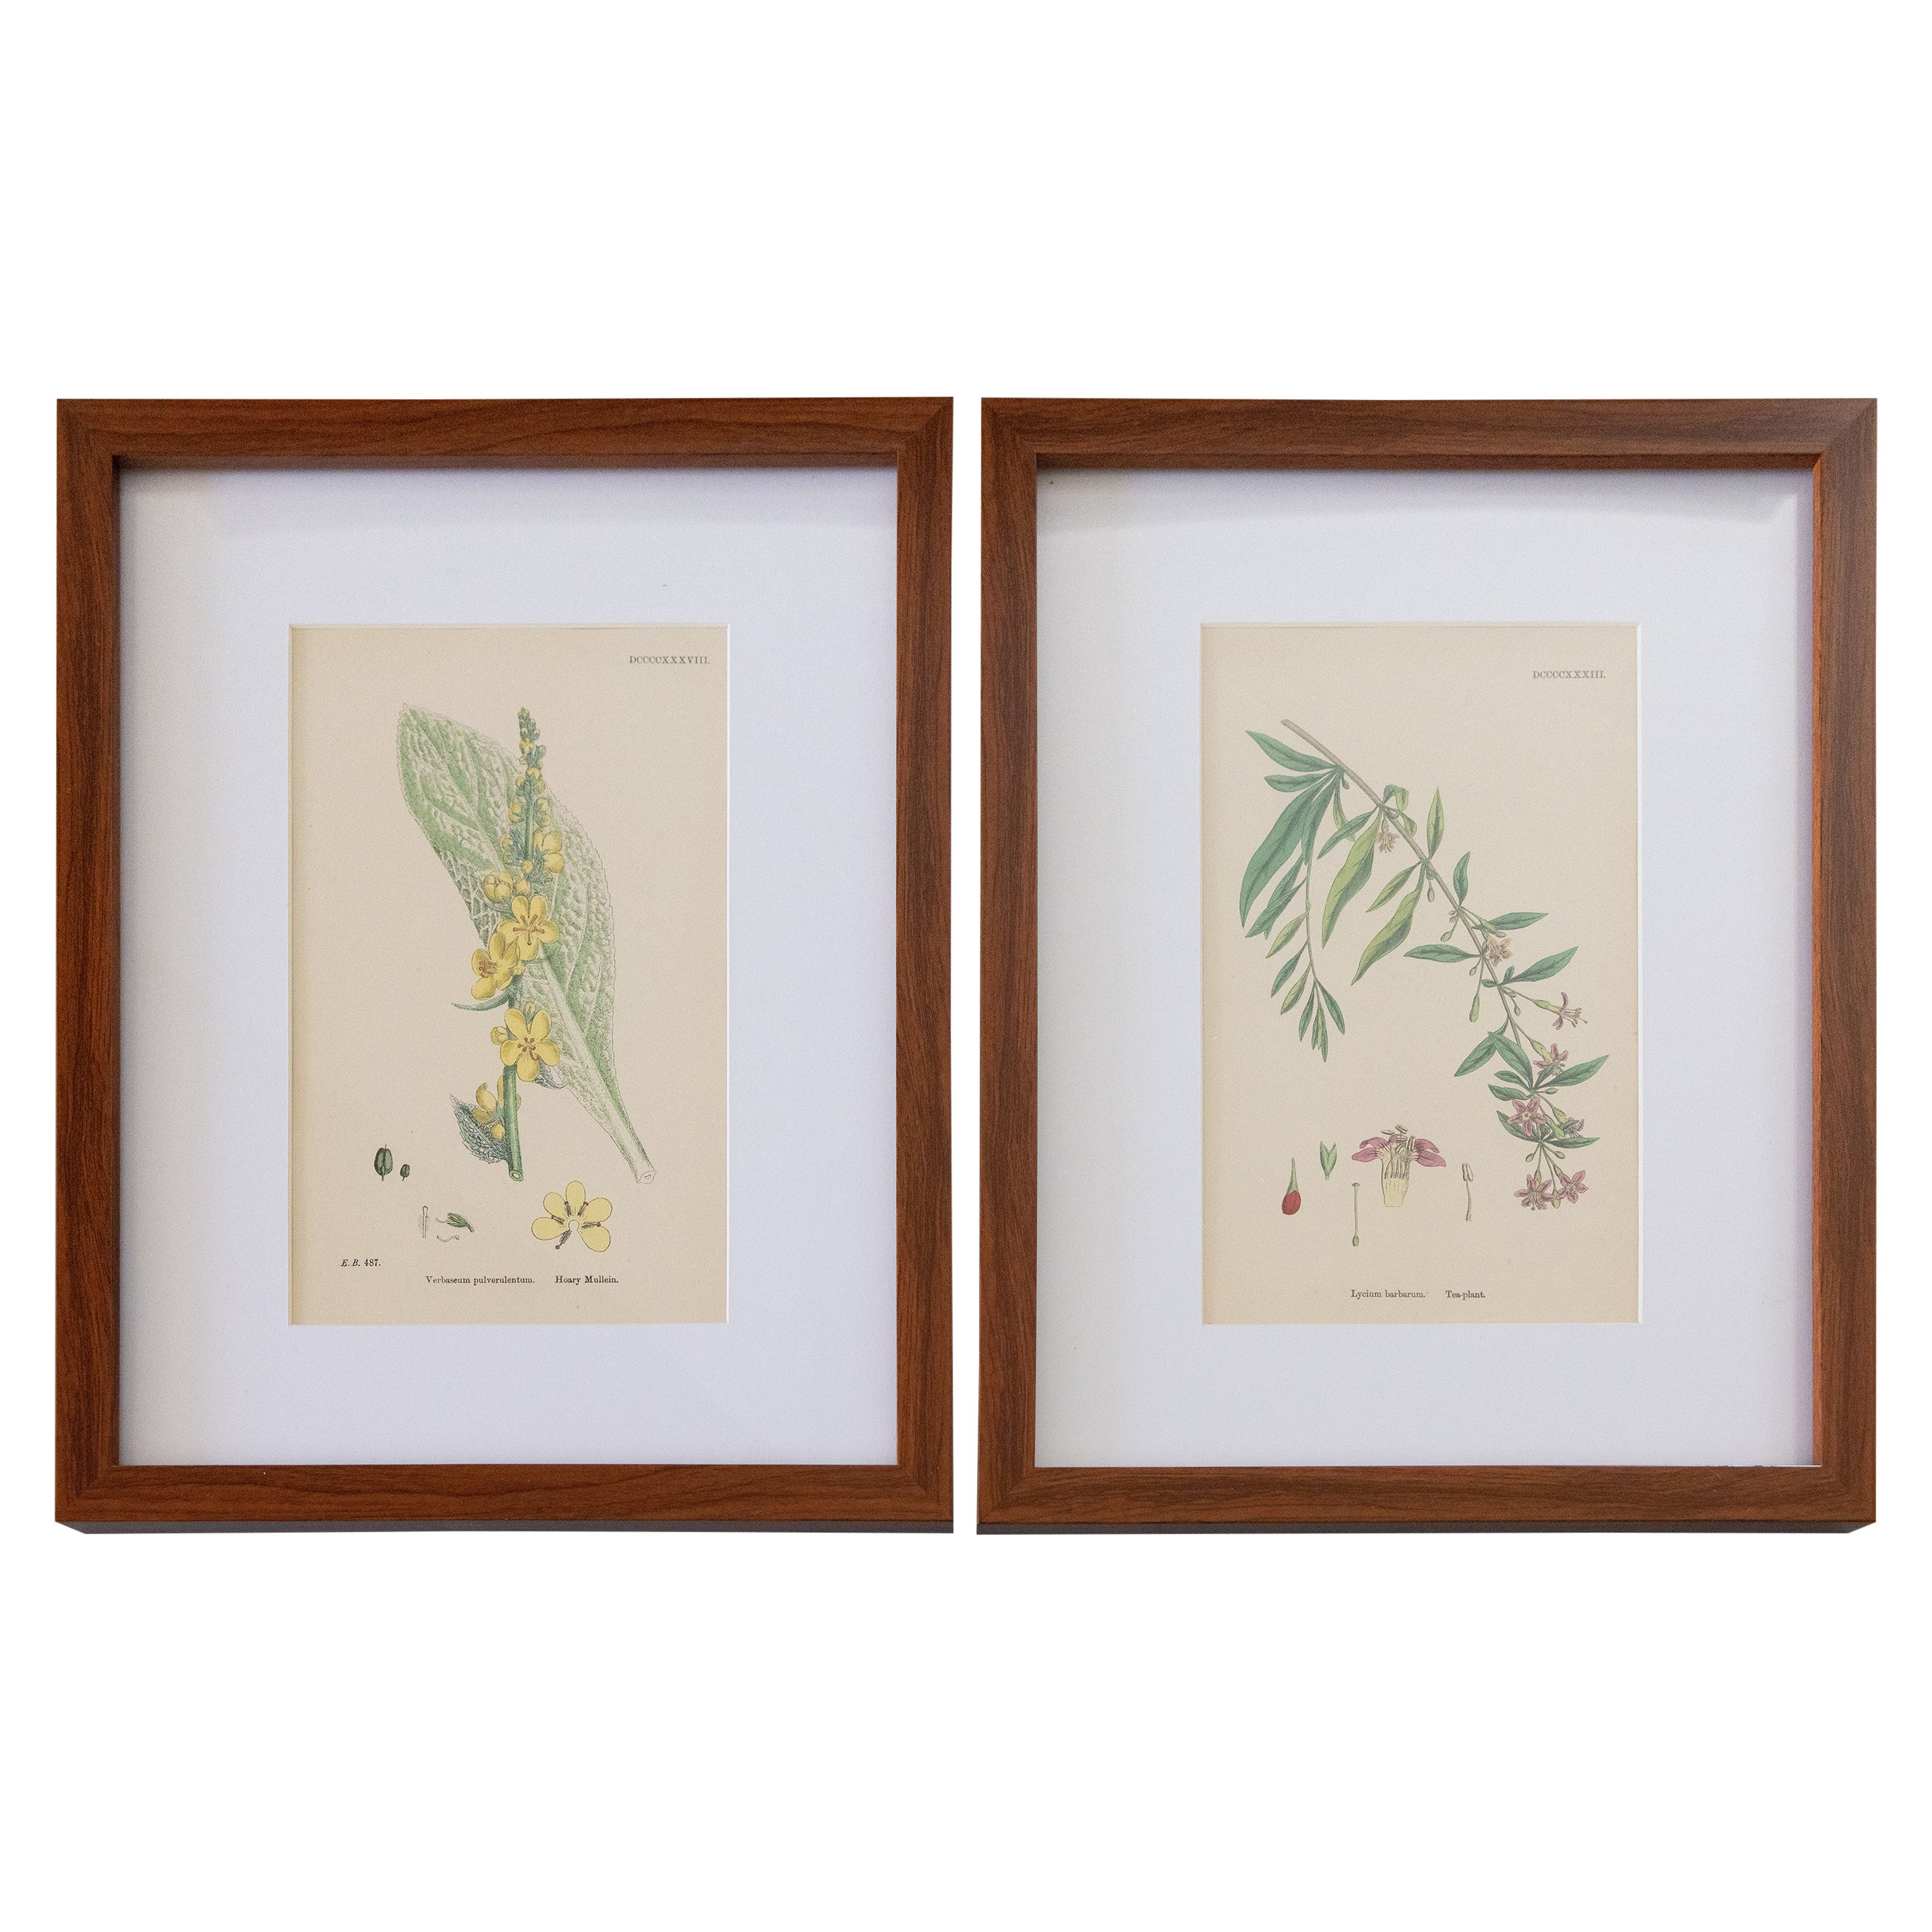 Sowerby's English Botany - Custom Framed Botanical Plates, Set of Two For Sale